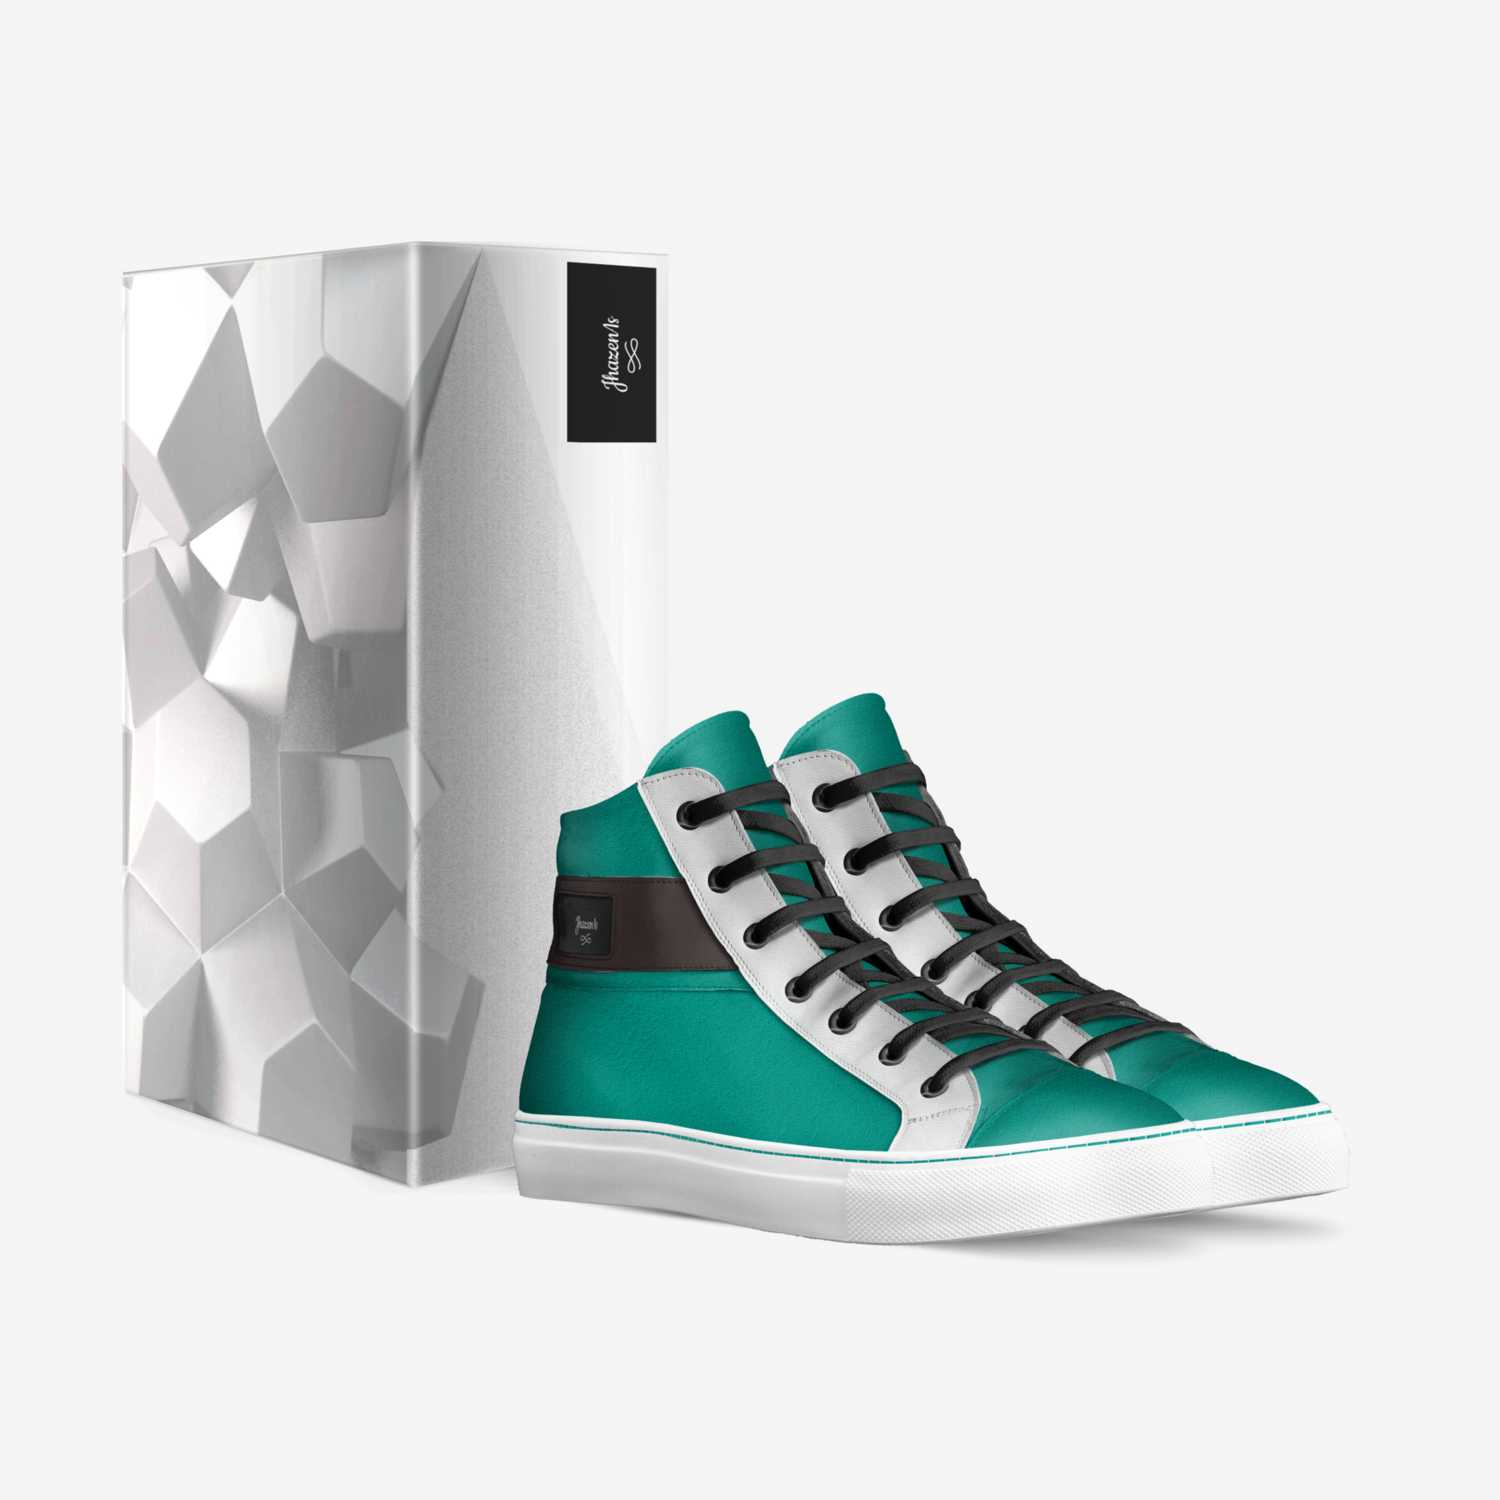 Jhazen1s custom made in Italy shoes by Jake Hazen | Box view